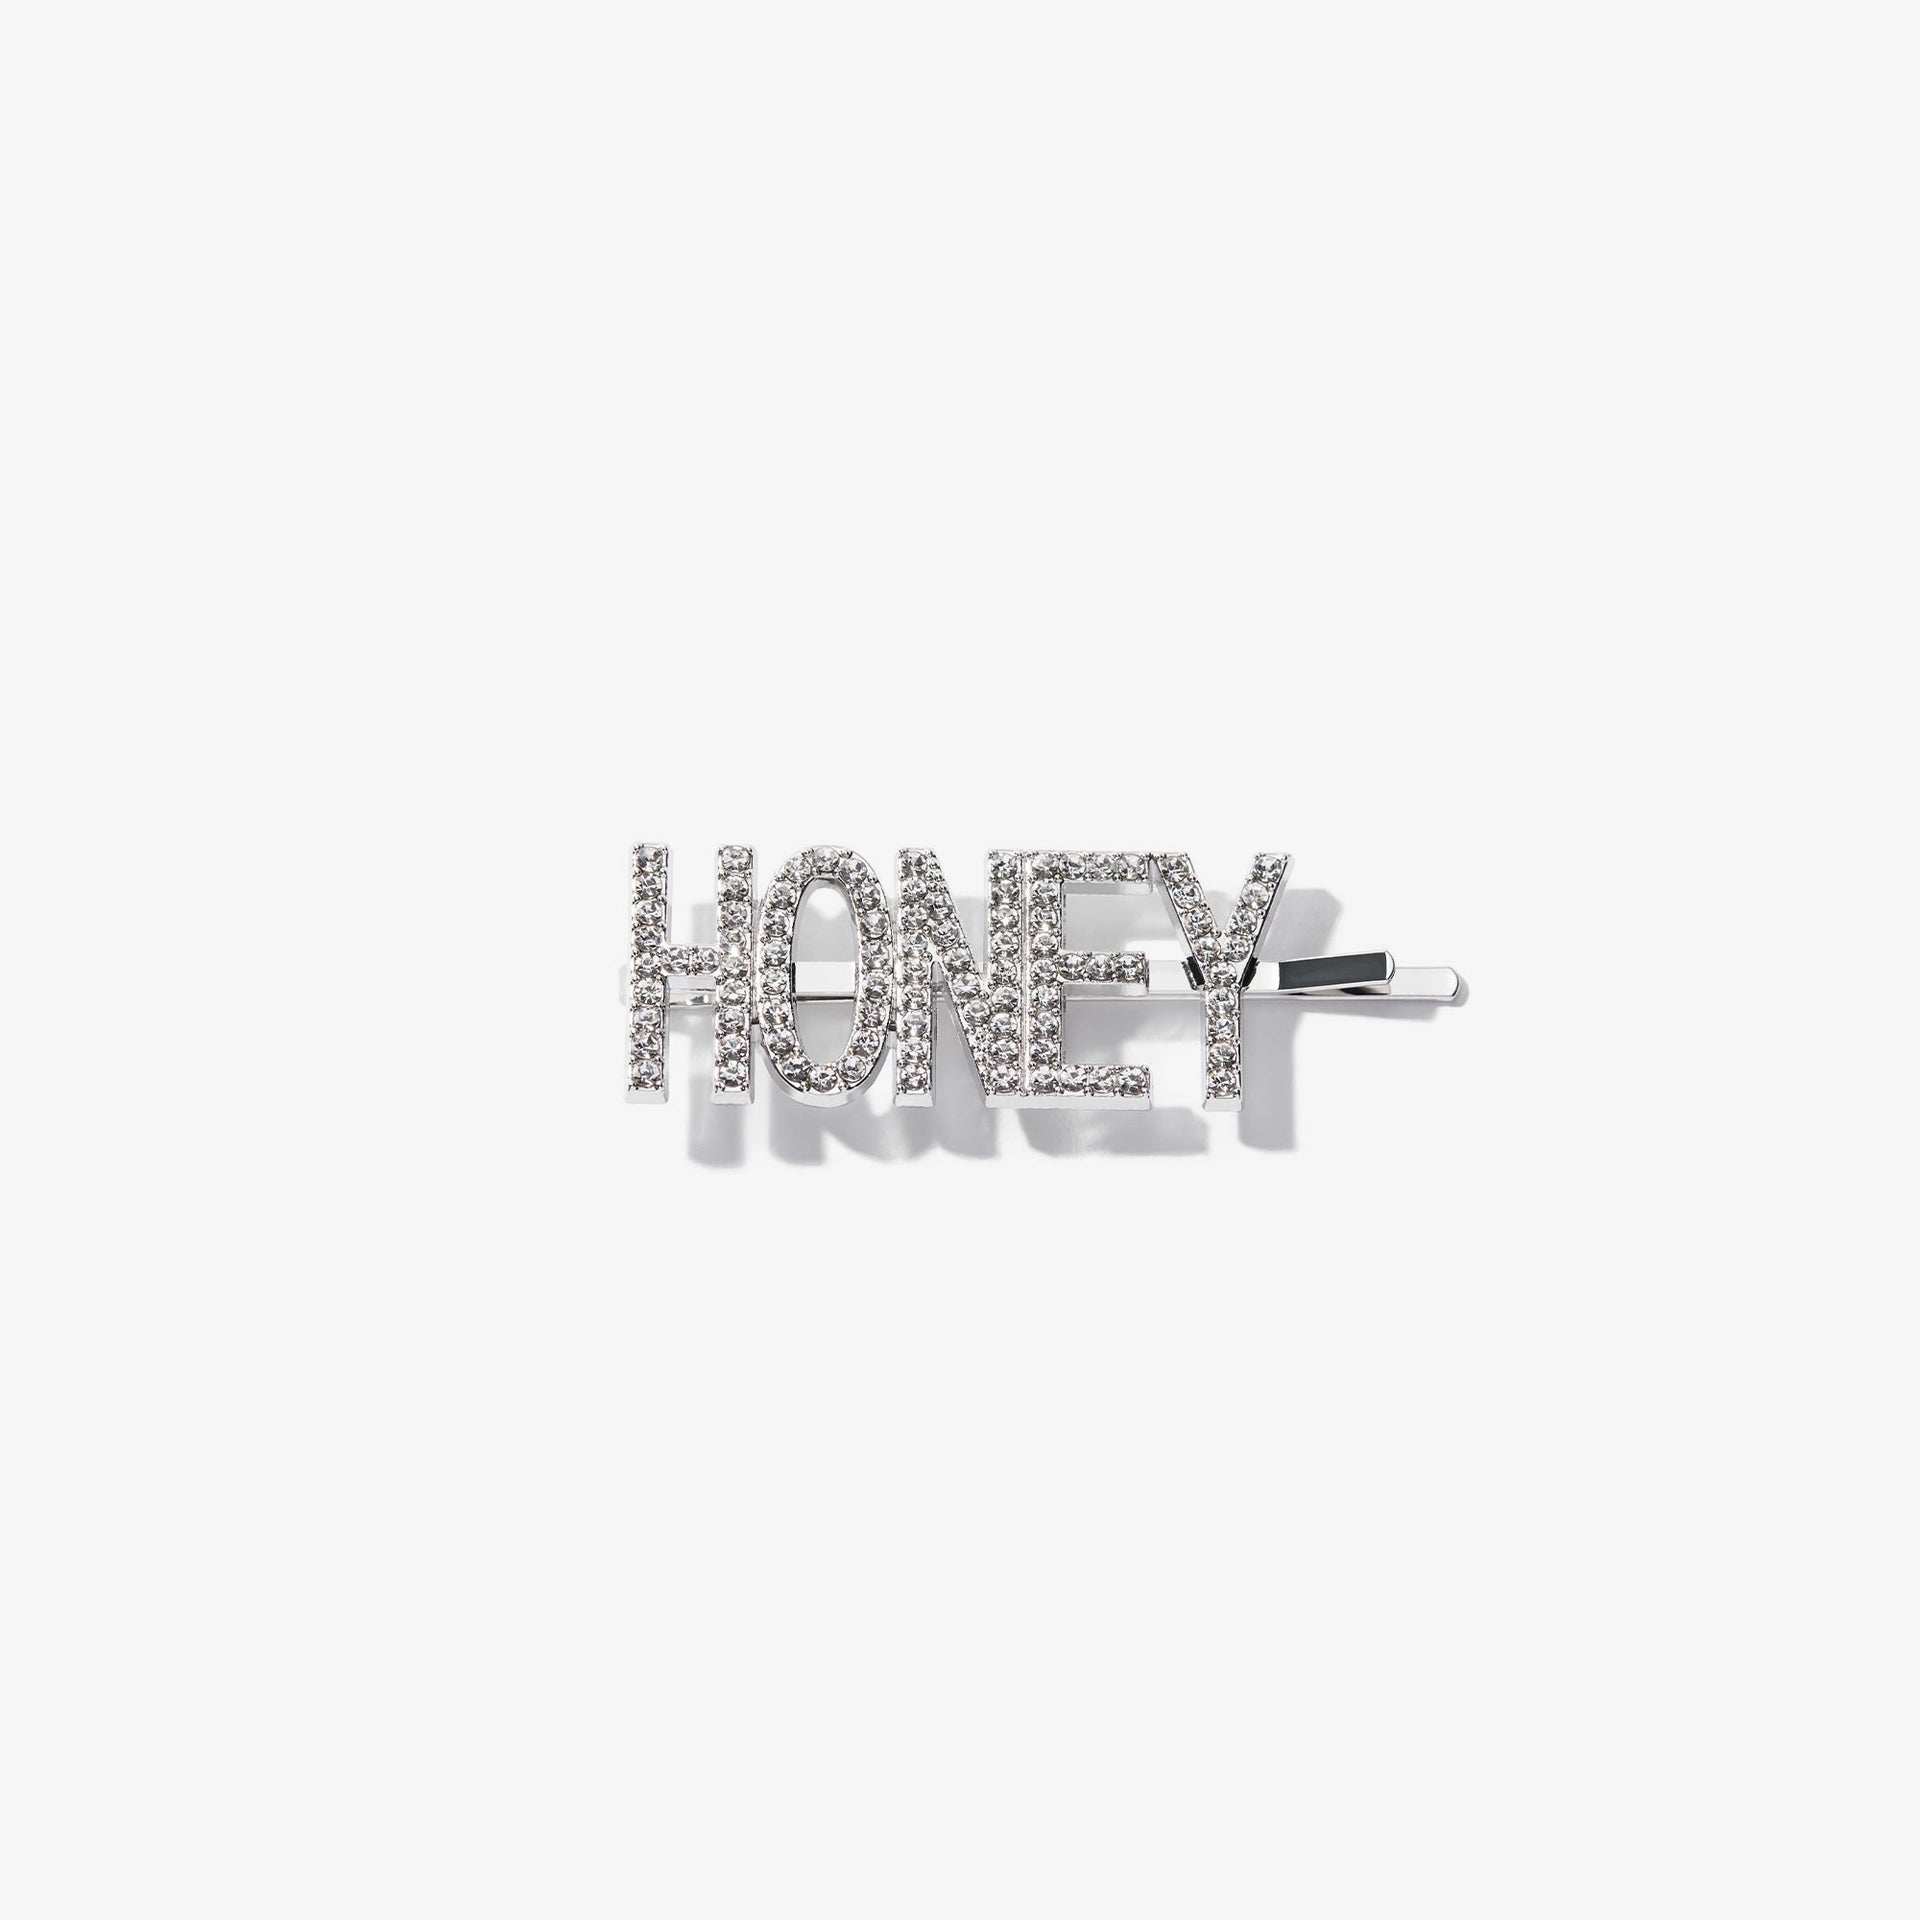 ABH Glam Hairpins - Silver Rhinestone Honey